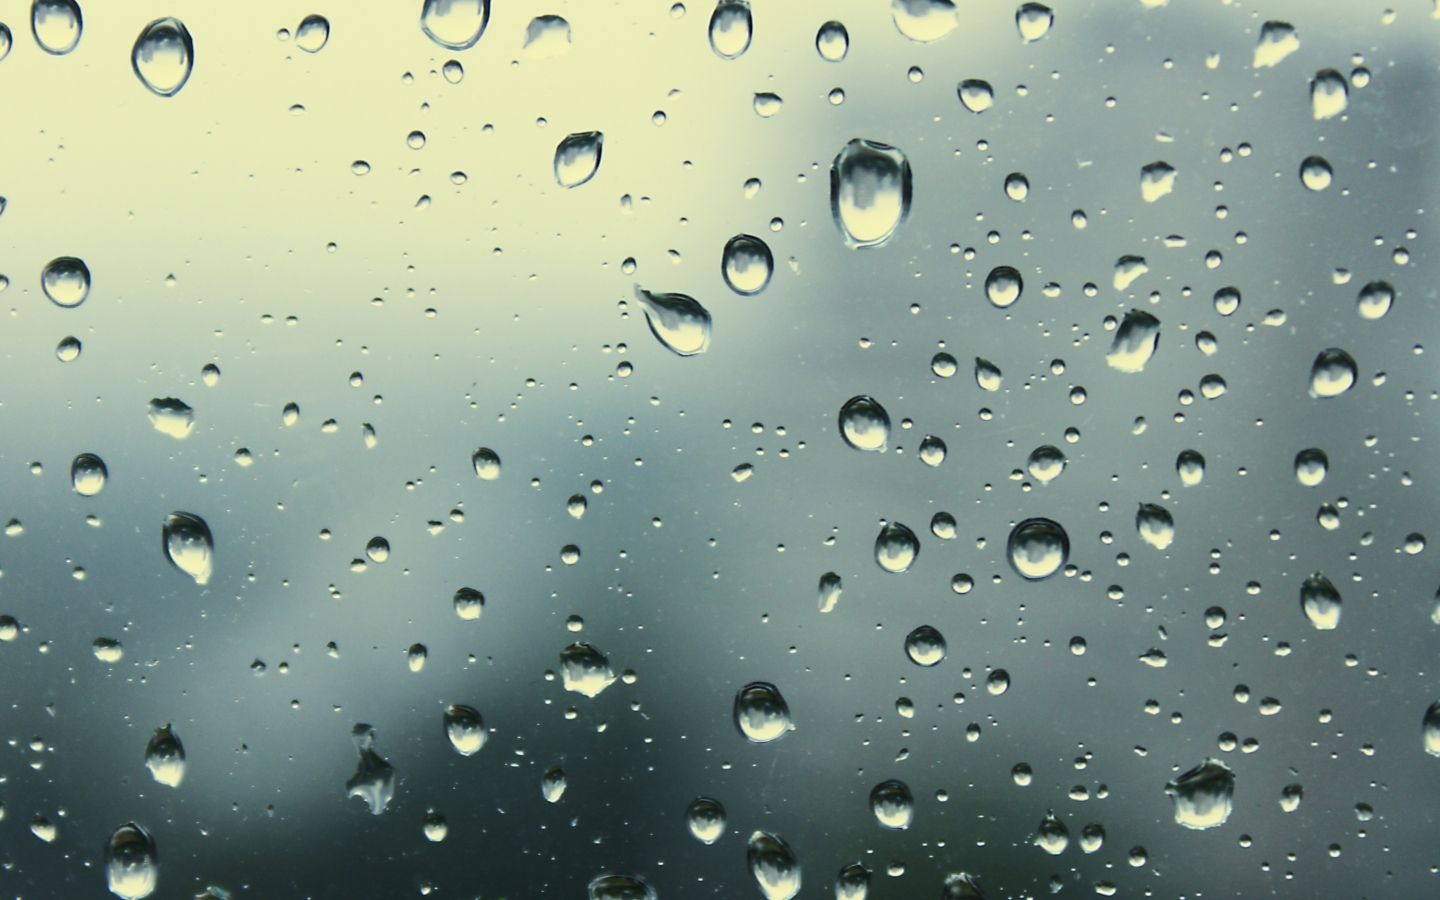 Rain Drops 5 Mac Wallpaper Download | Free Mac Wallpapers Download